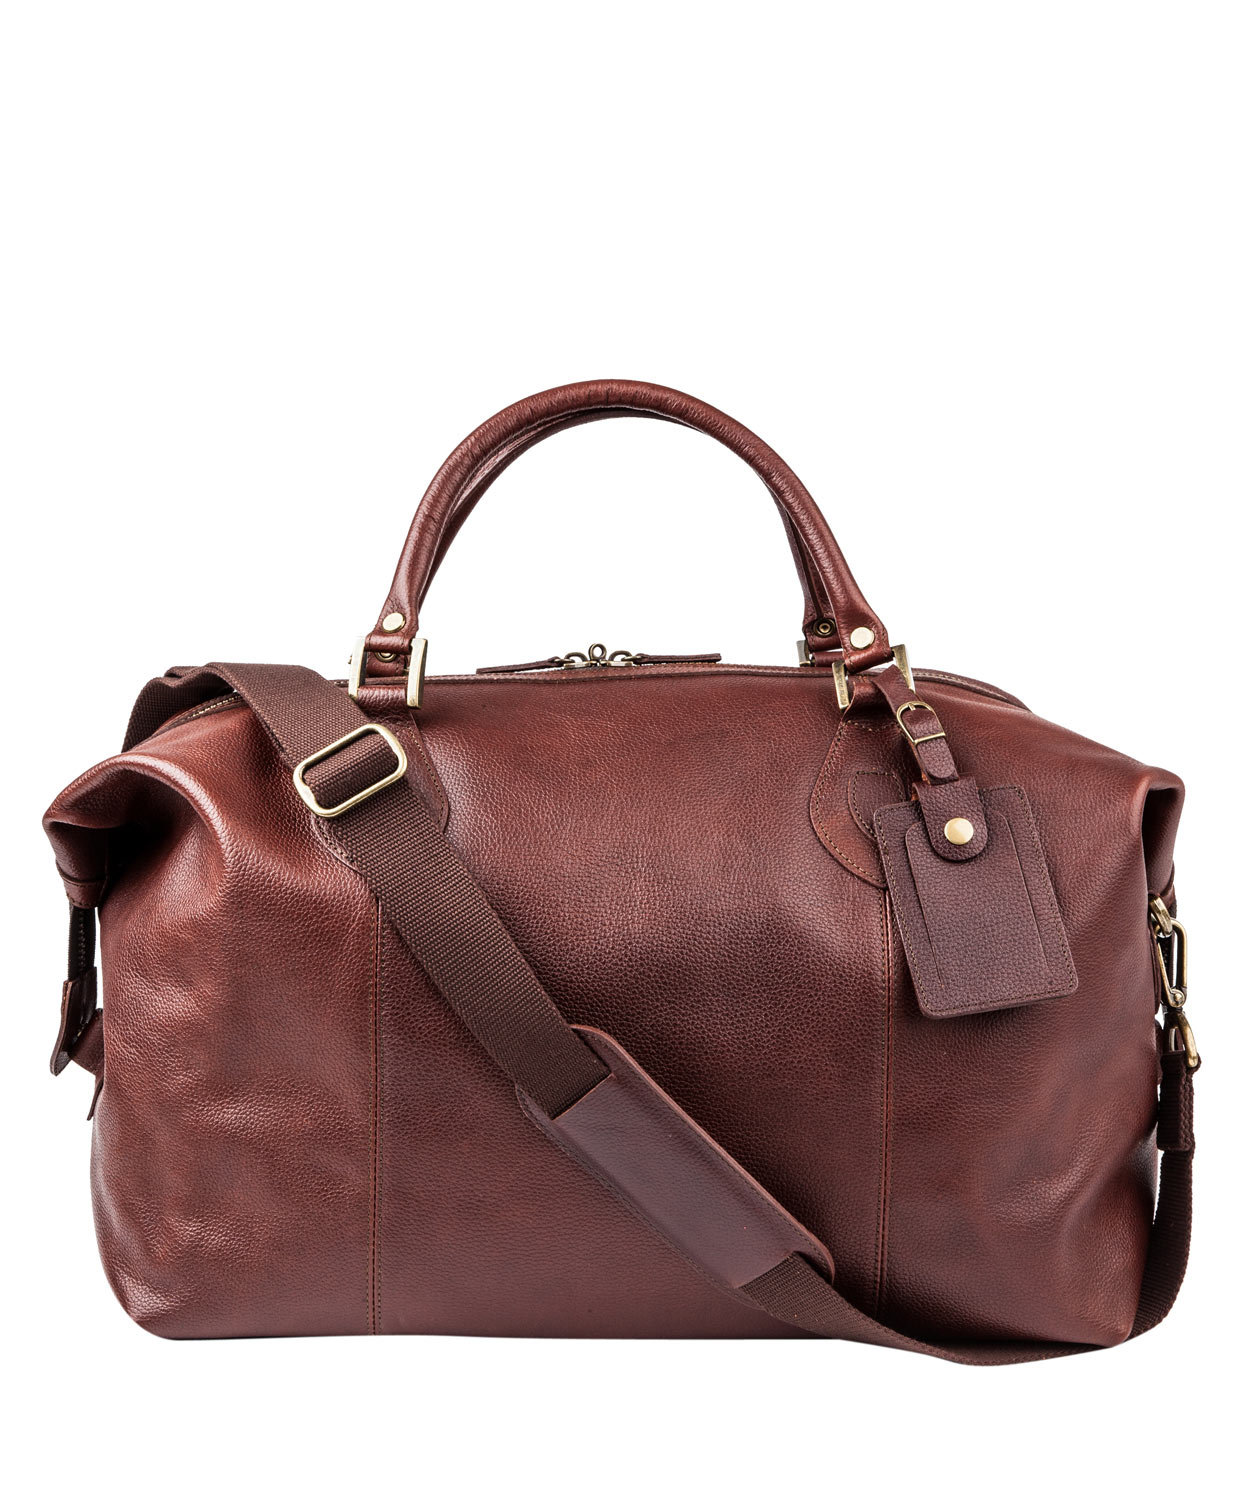 Lyst - Barbour Leather Explorer Travel Bag in Brown for Men